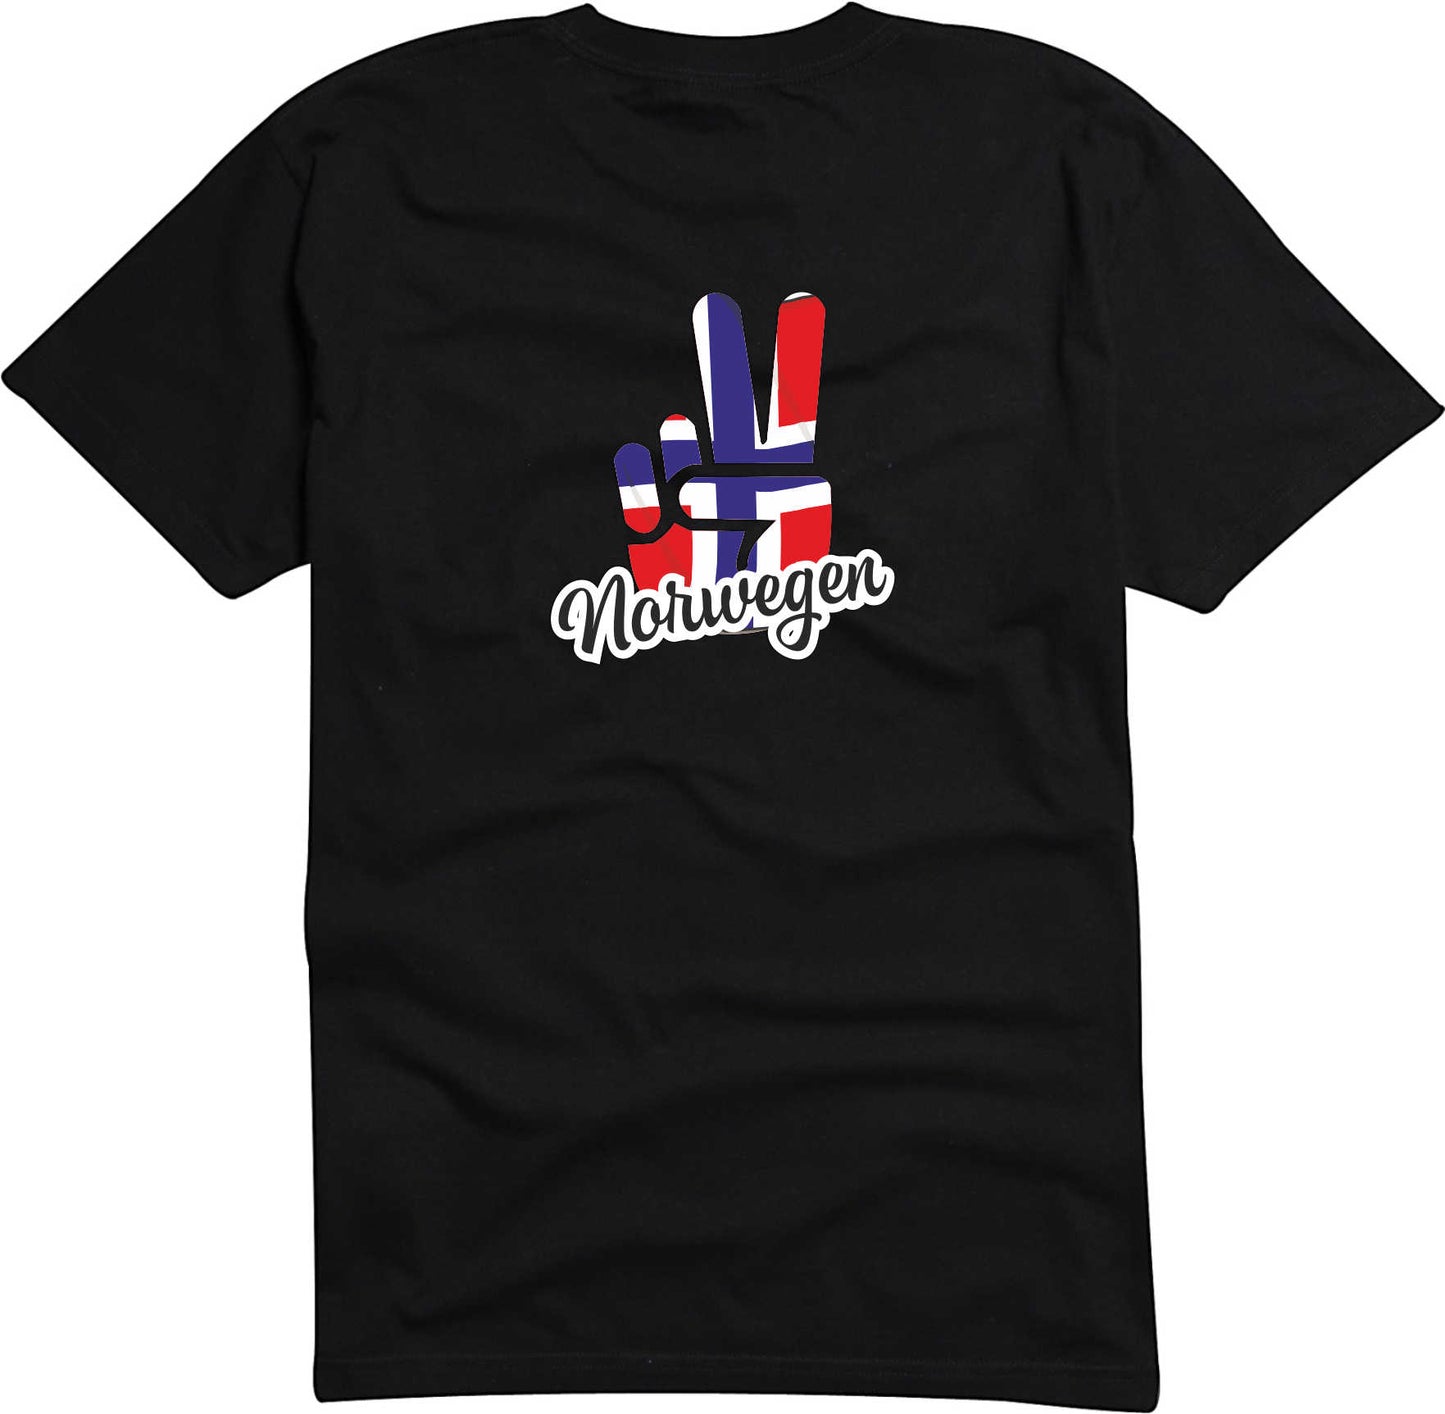 T-Shirt Herren - Victory - Flagge / Fahne - Norwegen  - Sieg